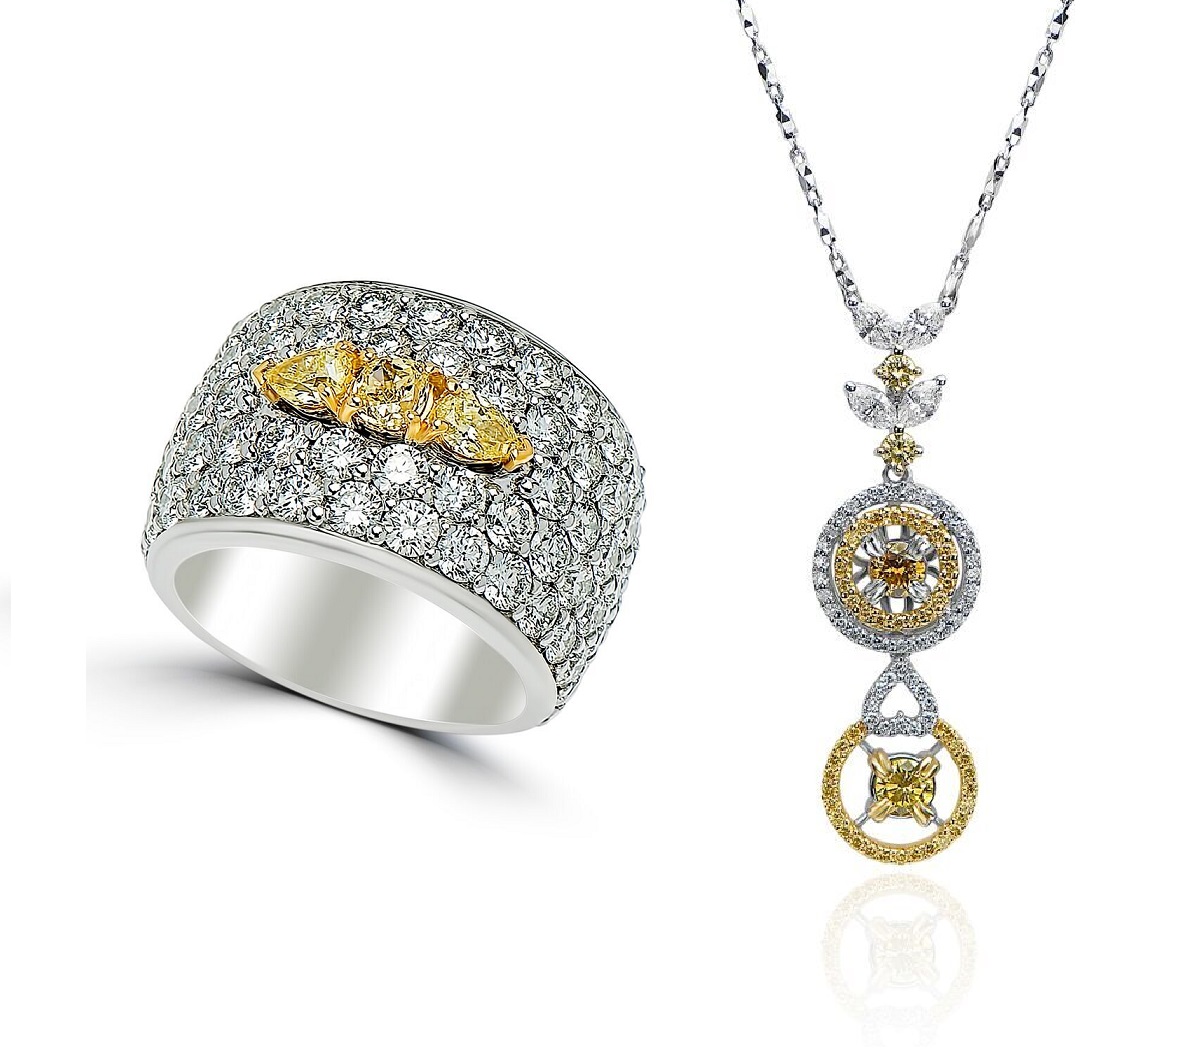 Mixed Fancy Vivid & Intense Yellow Diamond Ring & Pendant Set